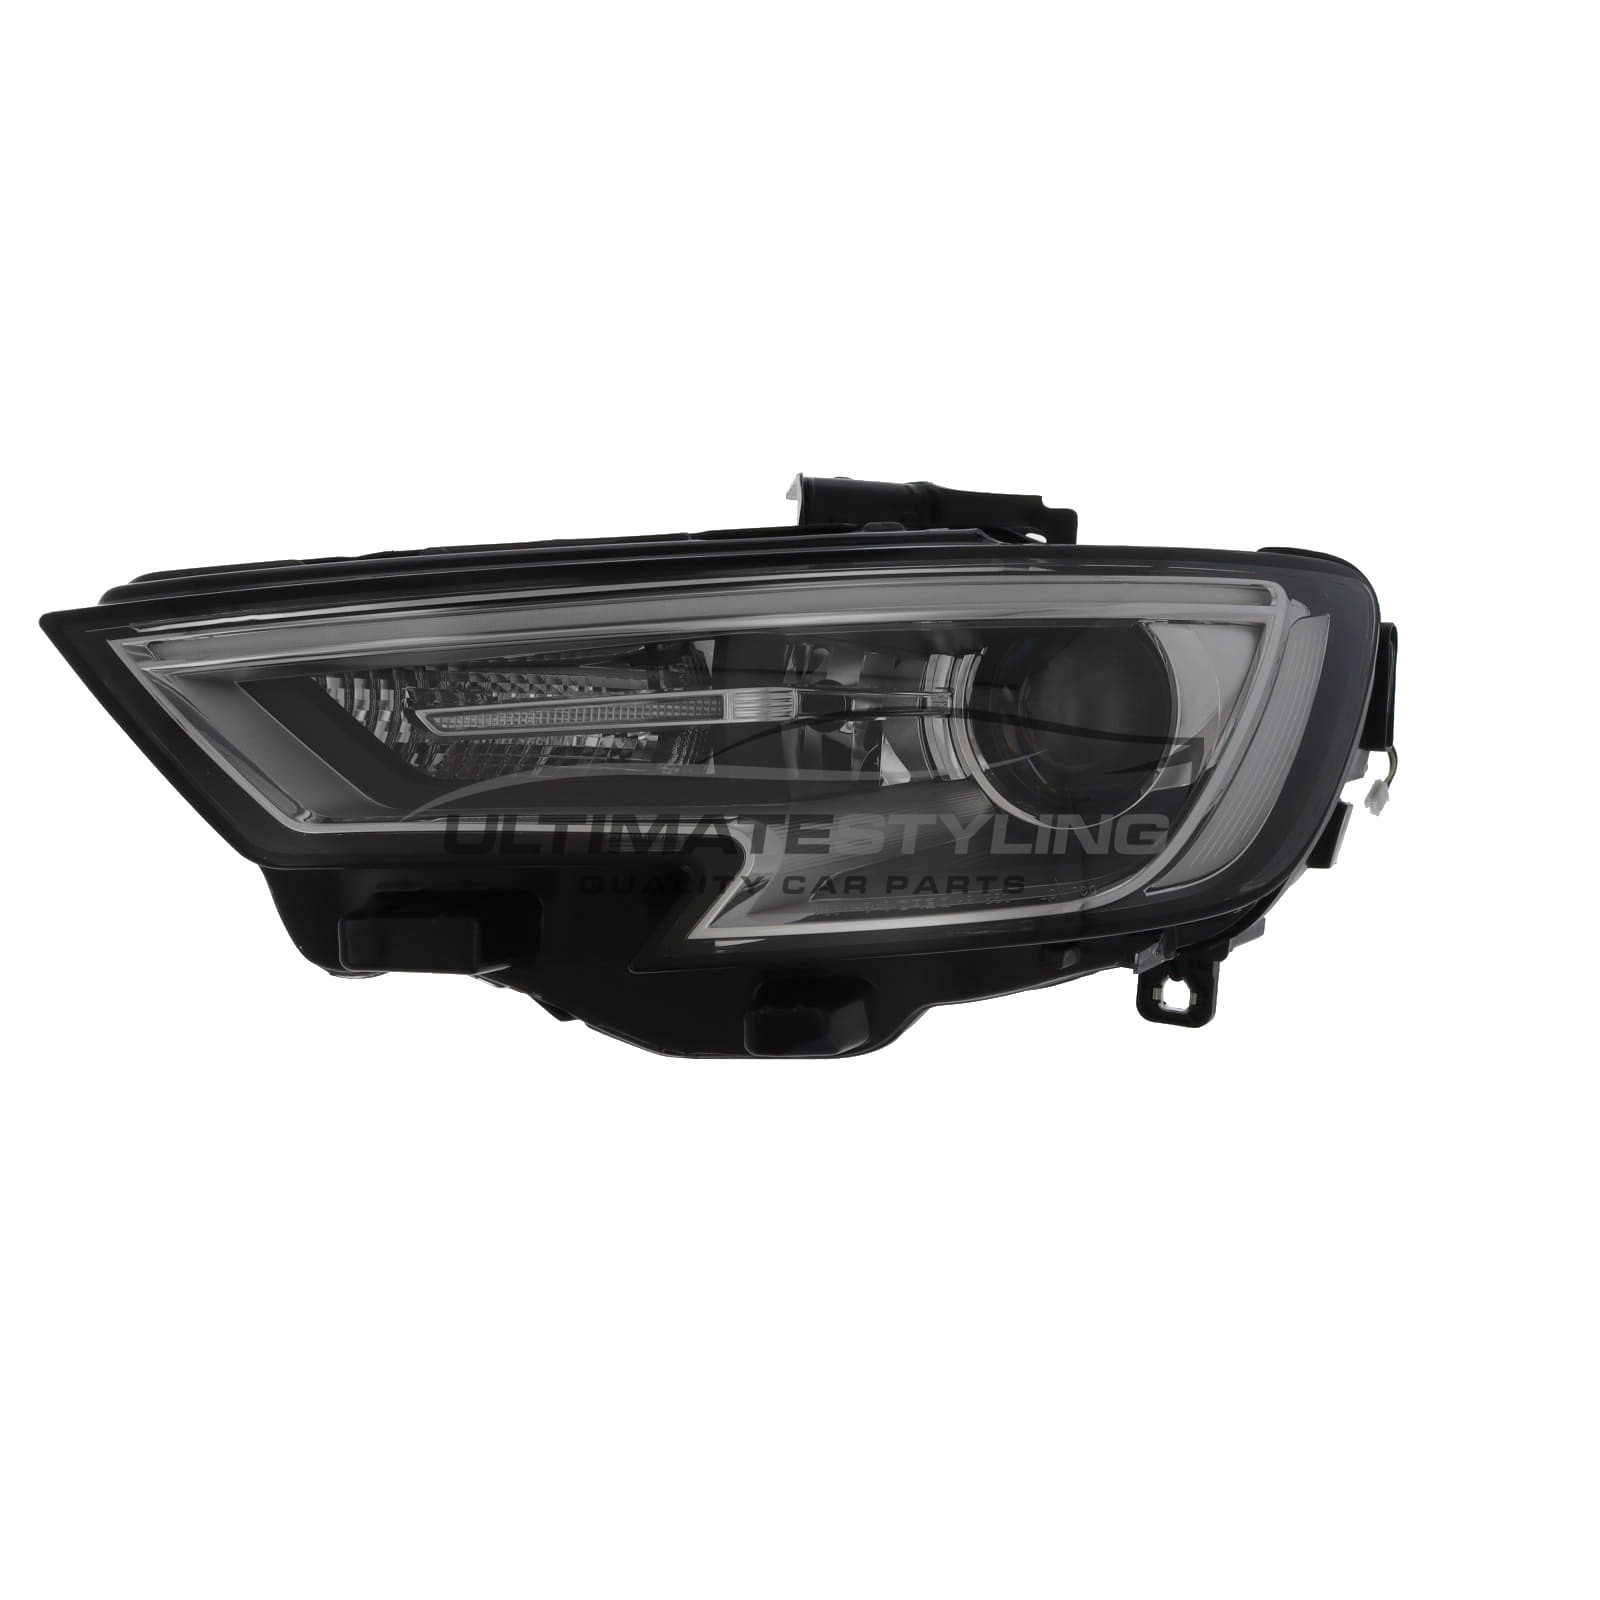 Audi A3 Headlight / Headlamp - Passenger Side (LH) - Xenon With LED Daytime Running Lamp